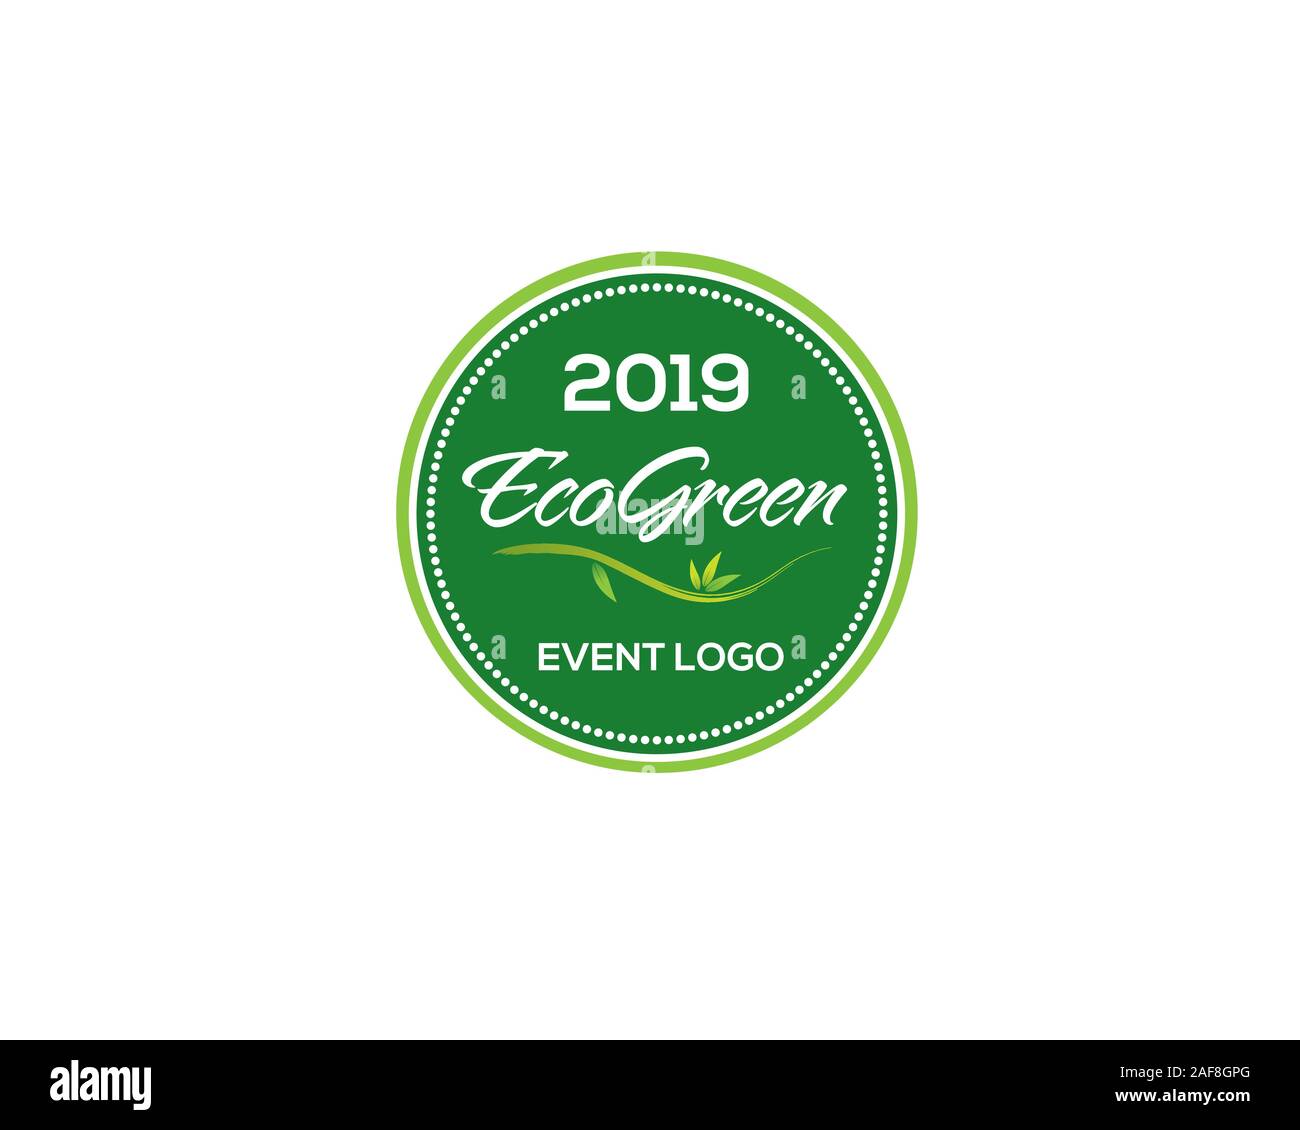 2019 international eco green event logo Stock Vector